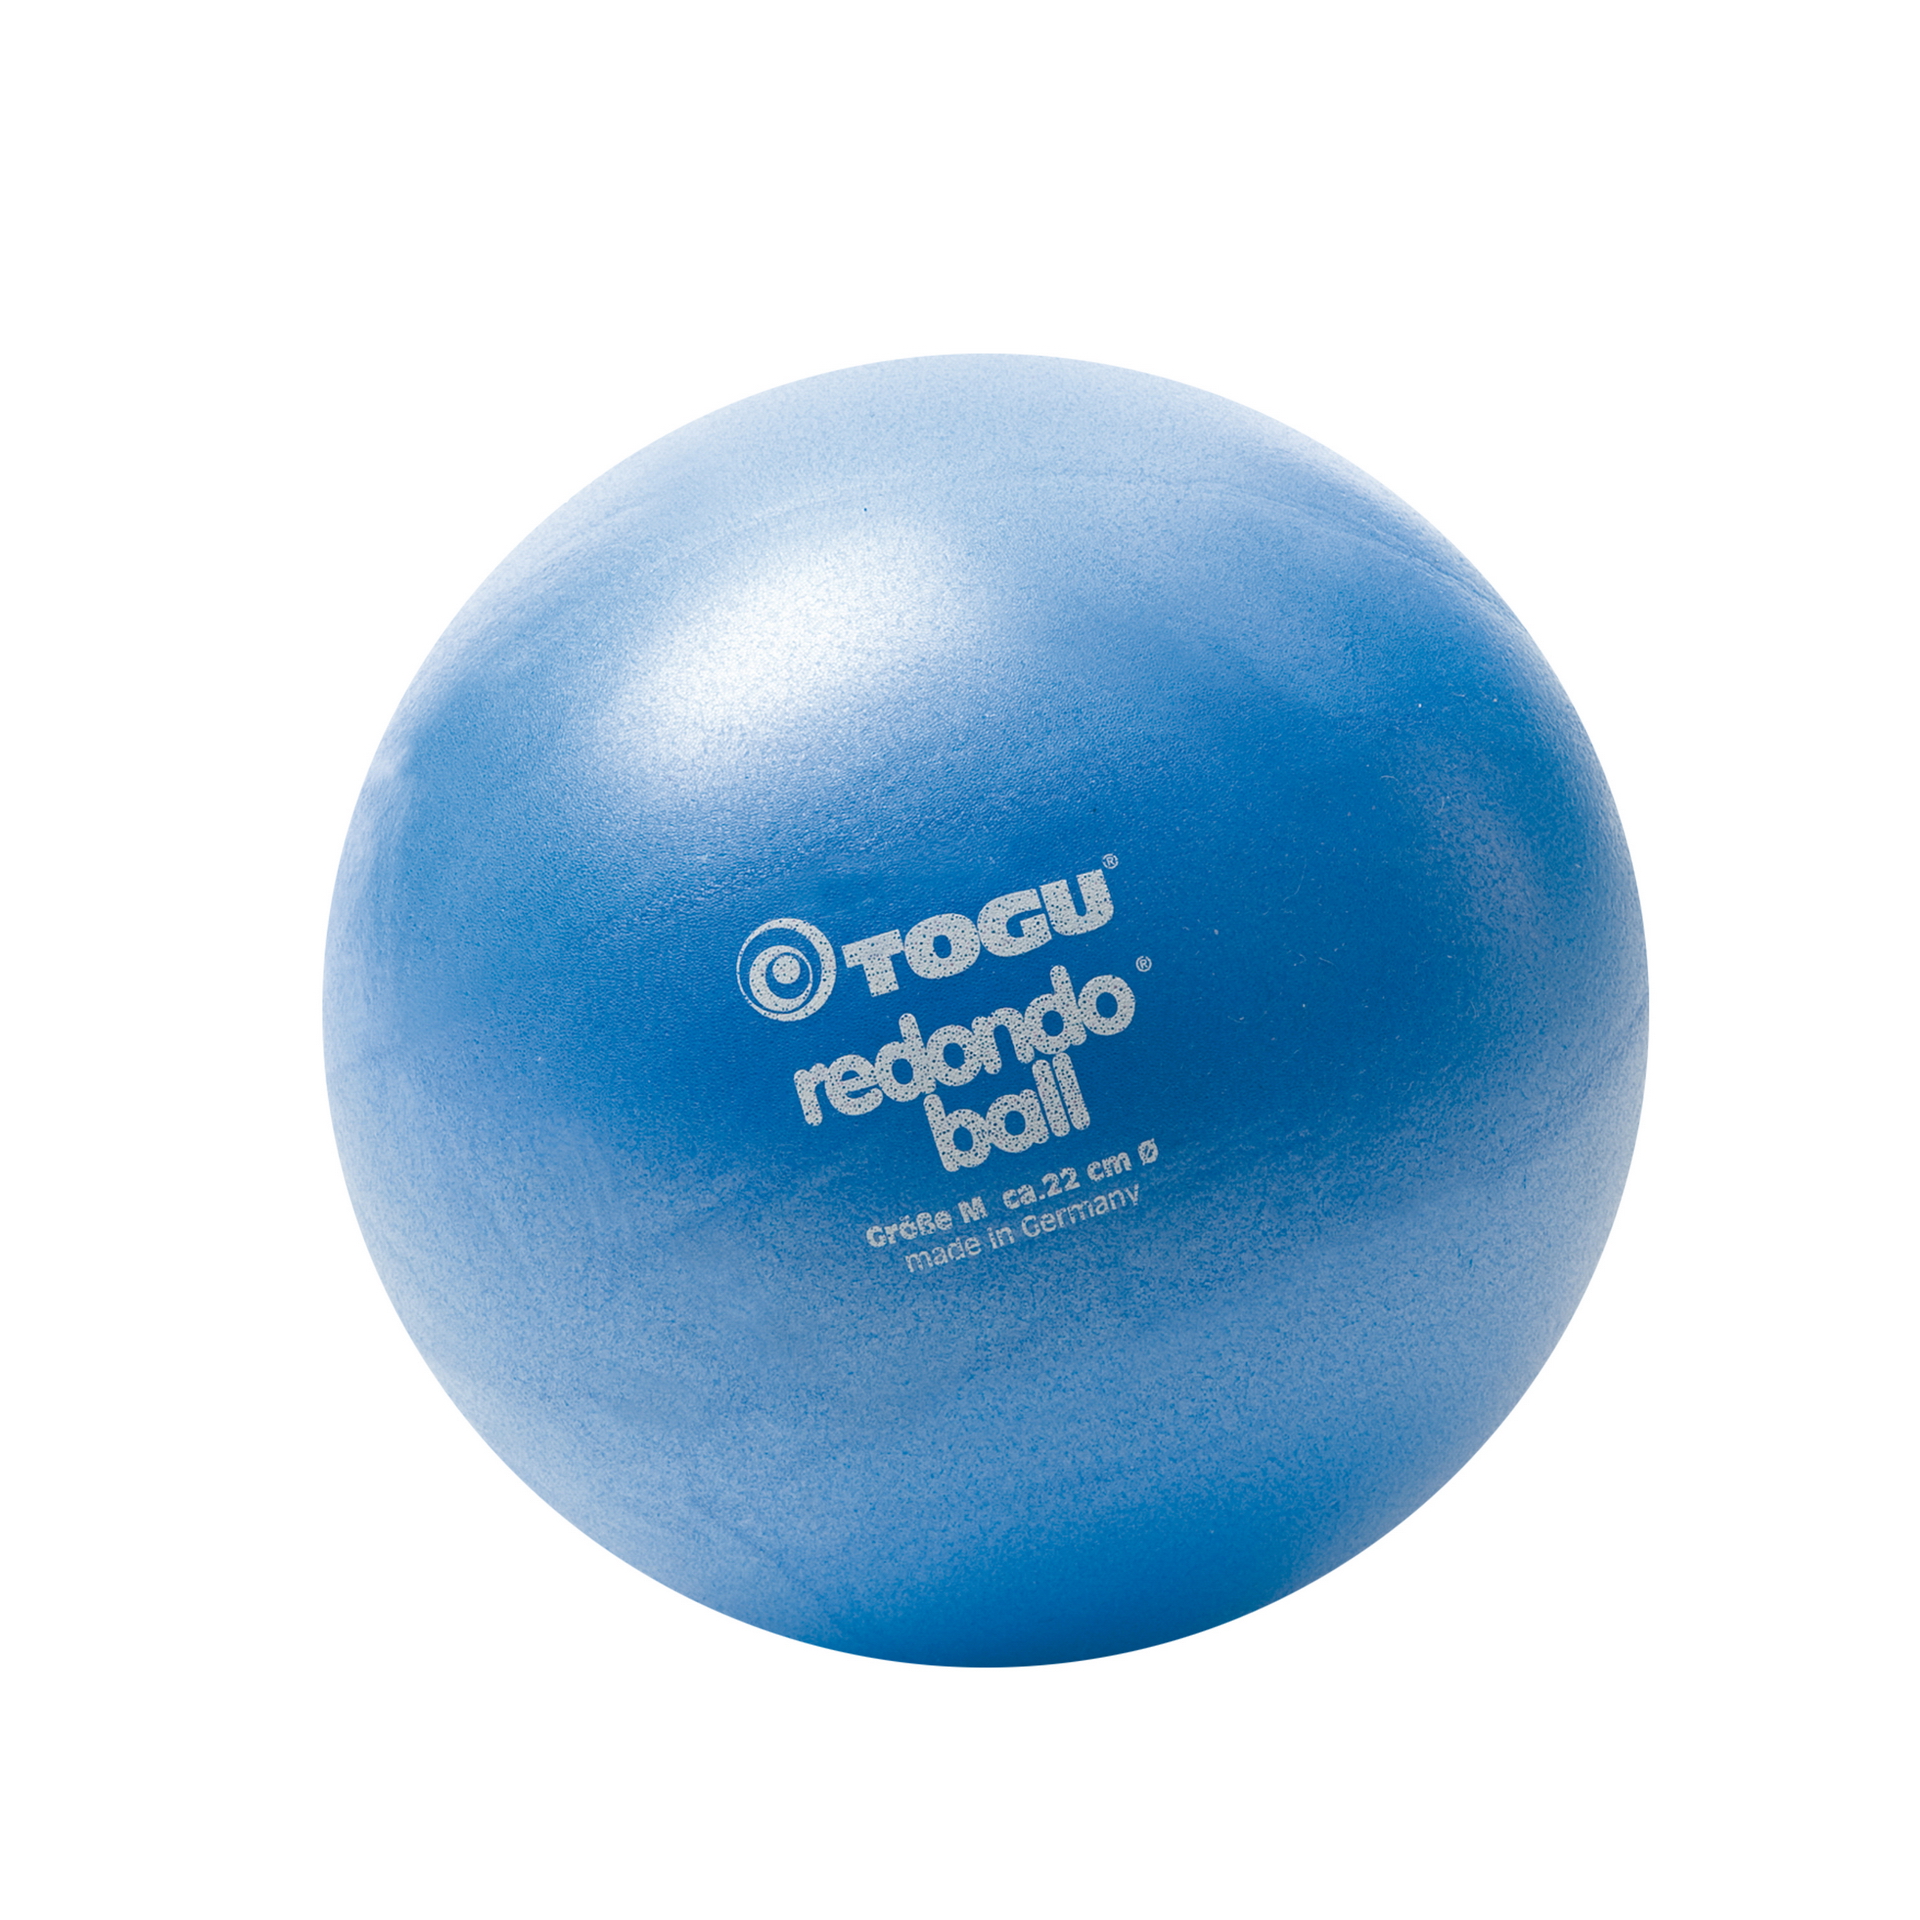 Redondo-Ball 'blau', Ø 22 cm